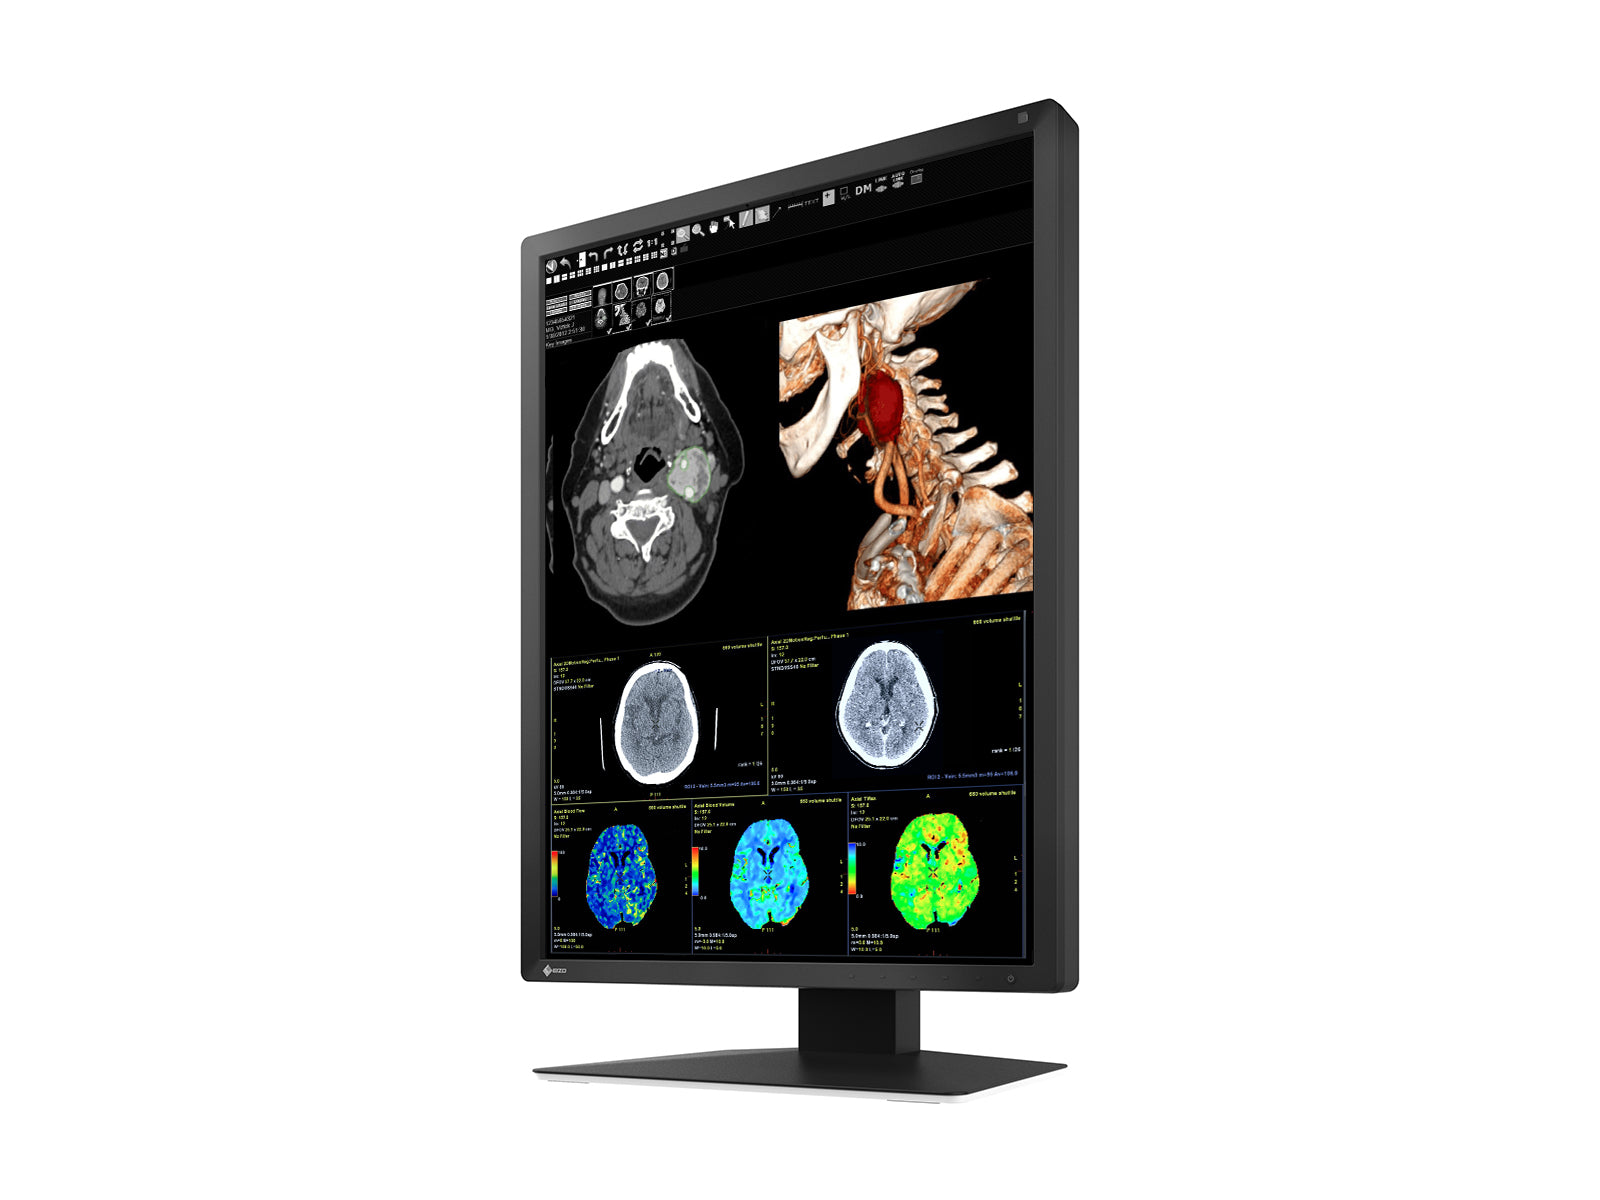 Eizo RadiForce MX217 2MP 21" Color LED Medical Display Monitor (MX217-BK) Monitors.com 